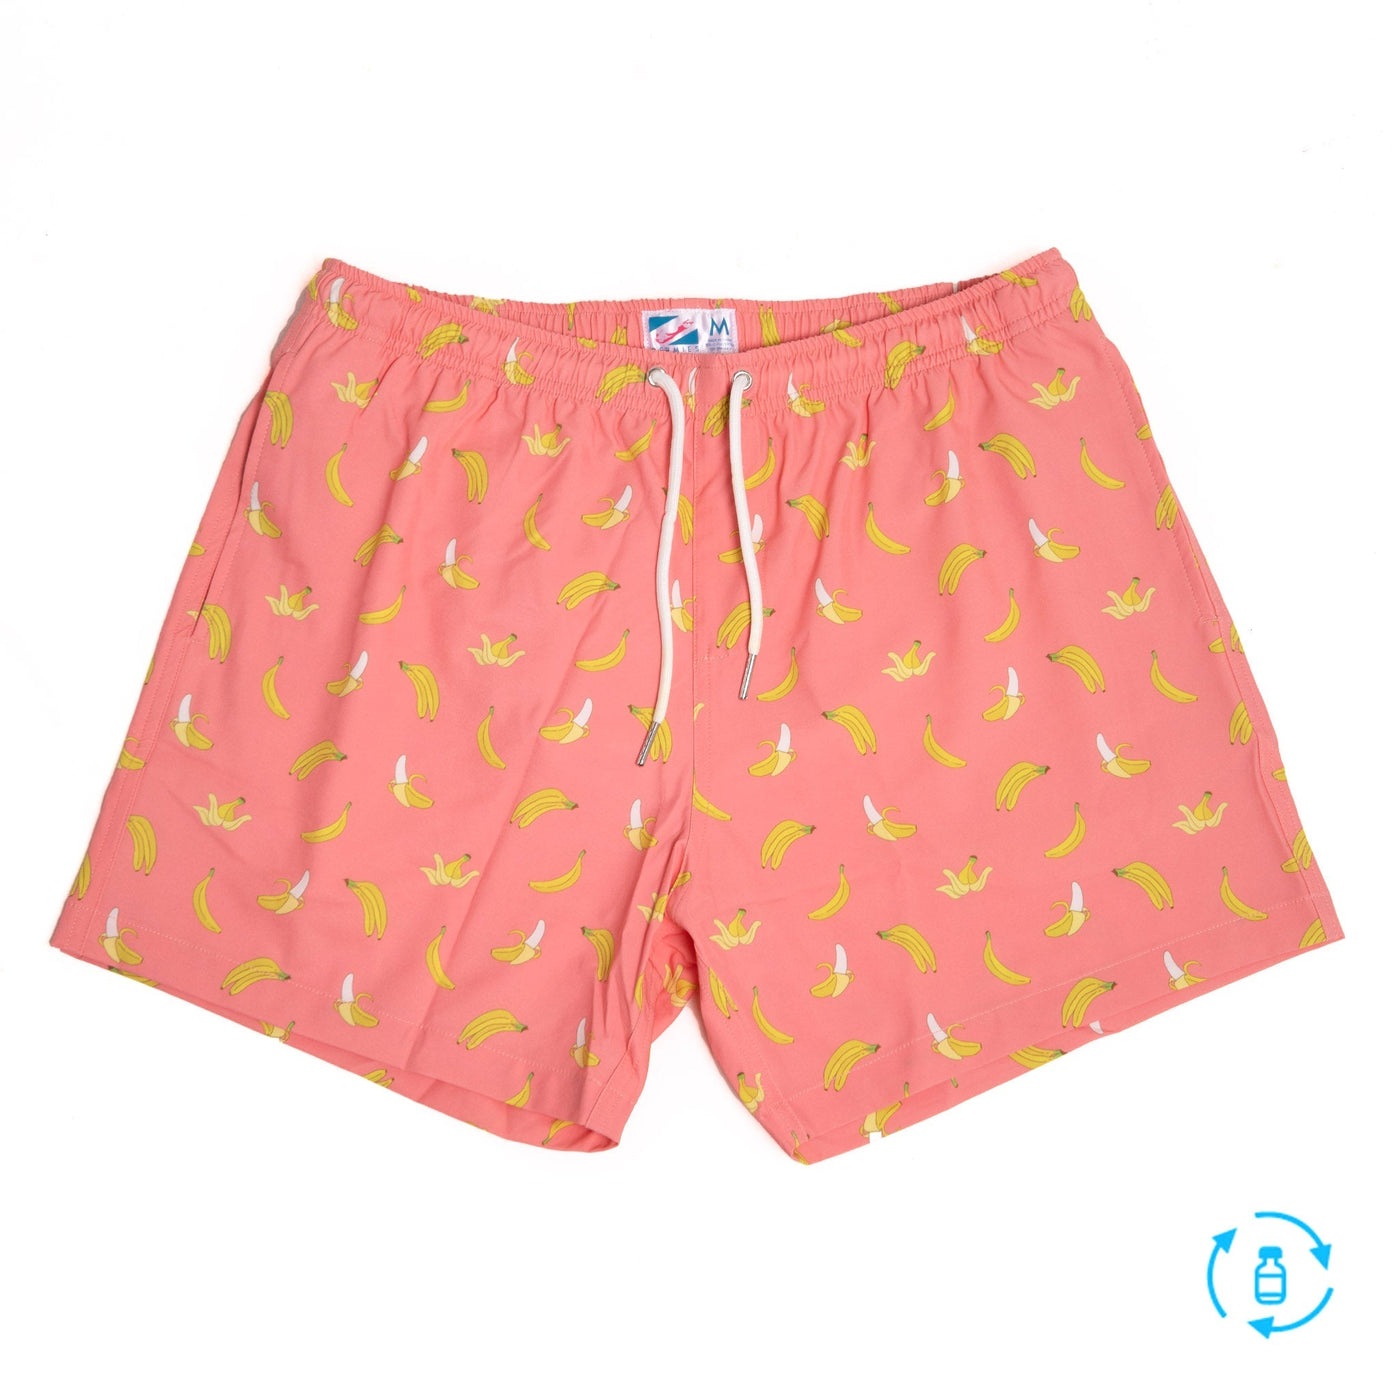 Pink Banana - 5" Swim Trunks by Bermies Swimwear